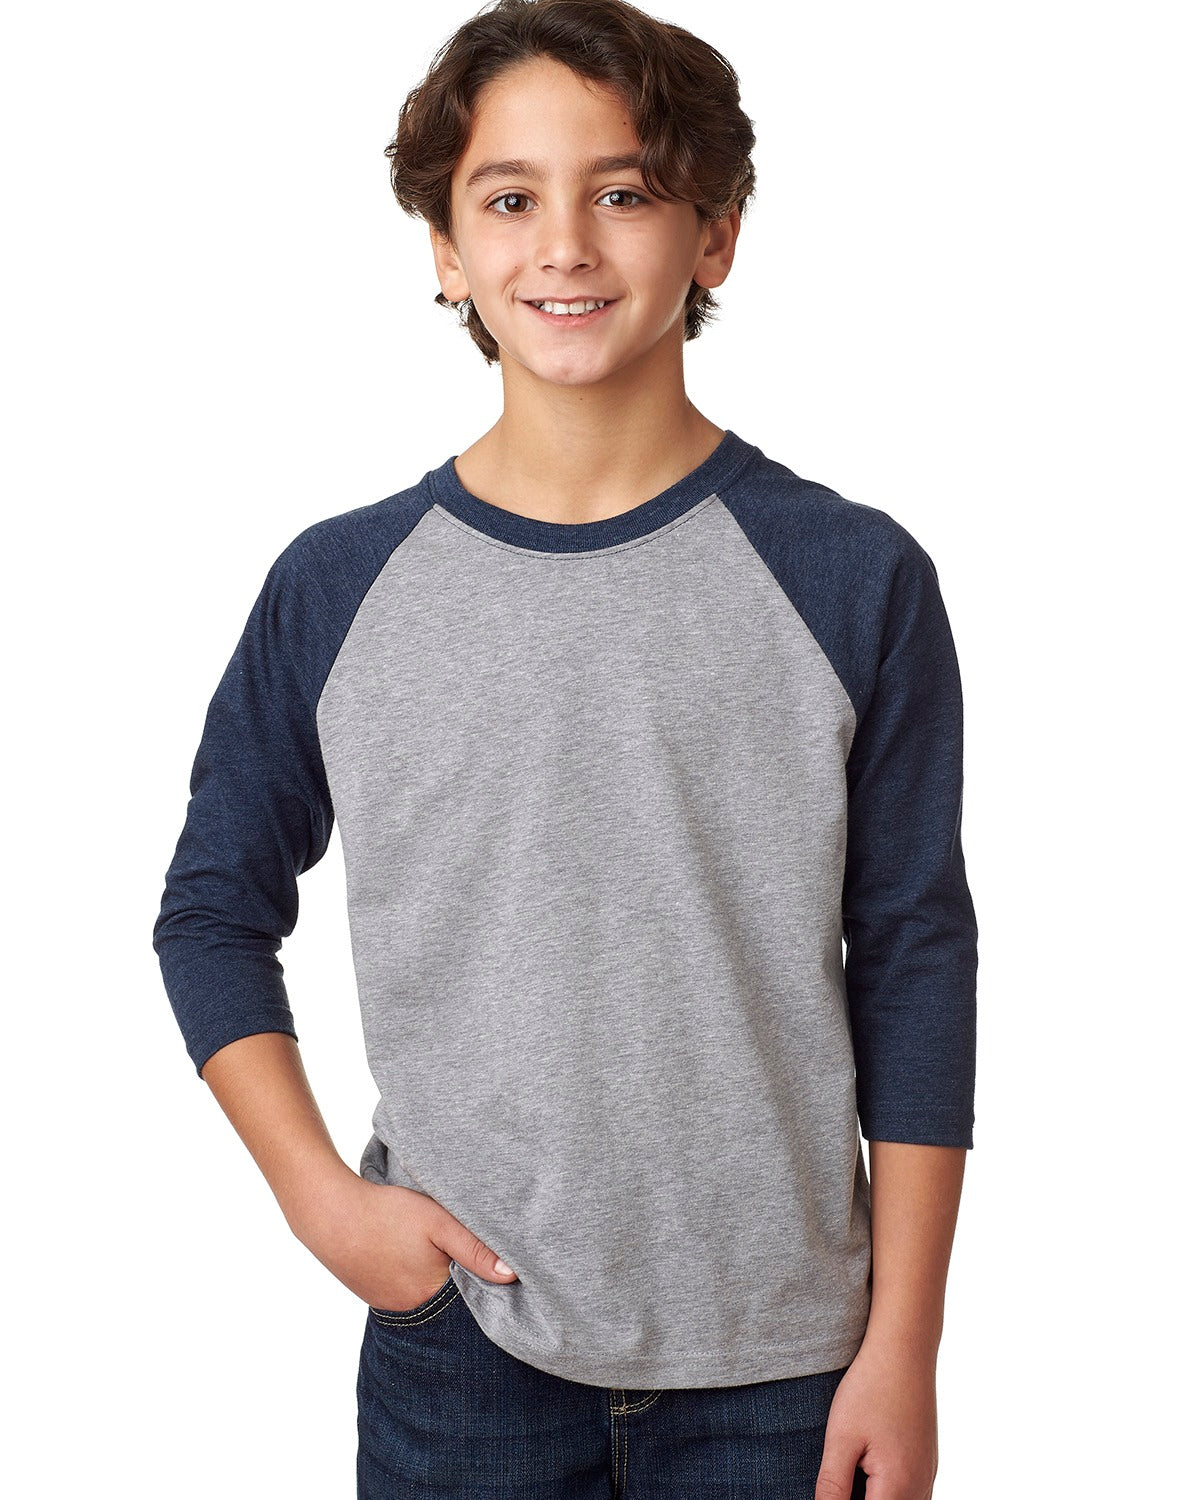 child model wearing next level youth 3/4 sleeve raglan tee in midnight navy dark heather grey